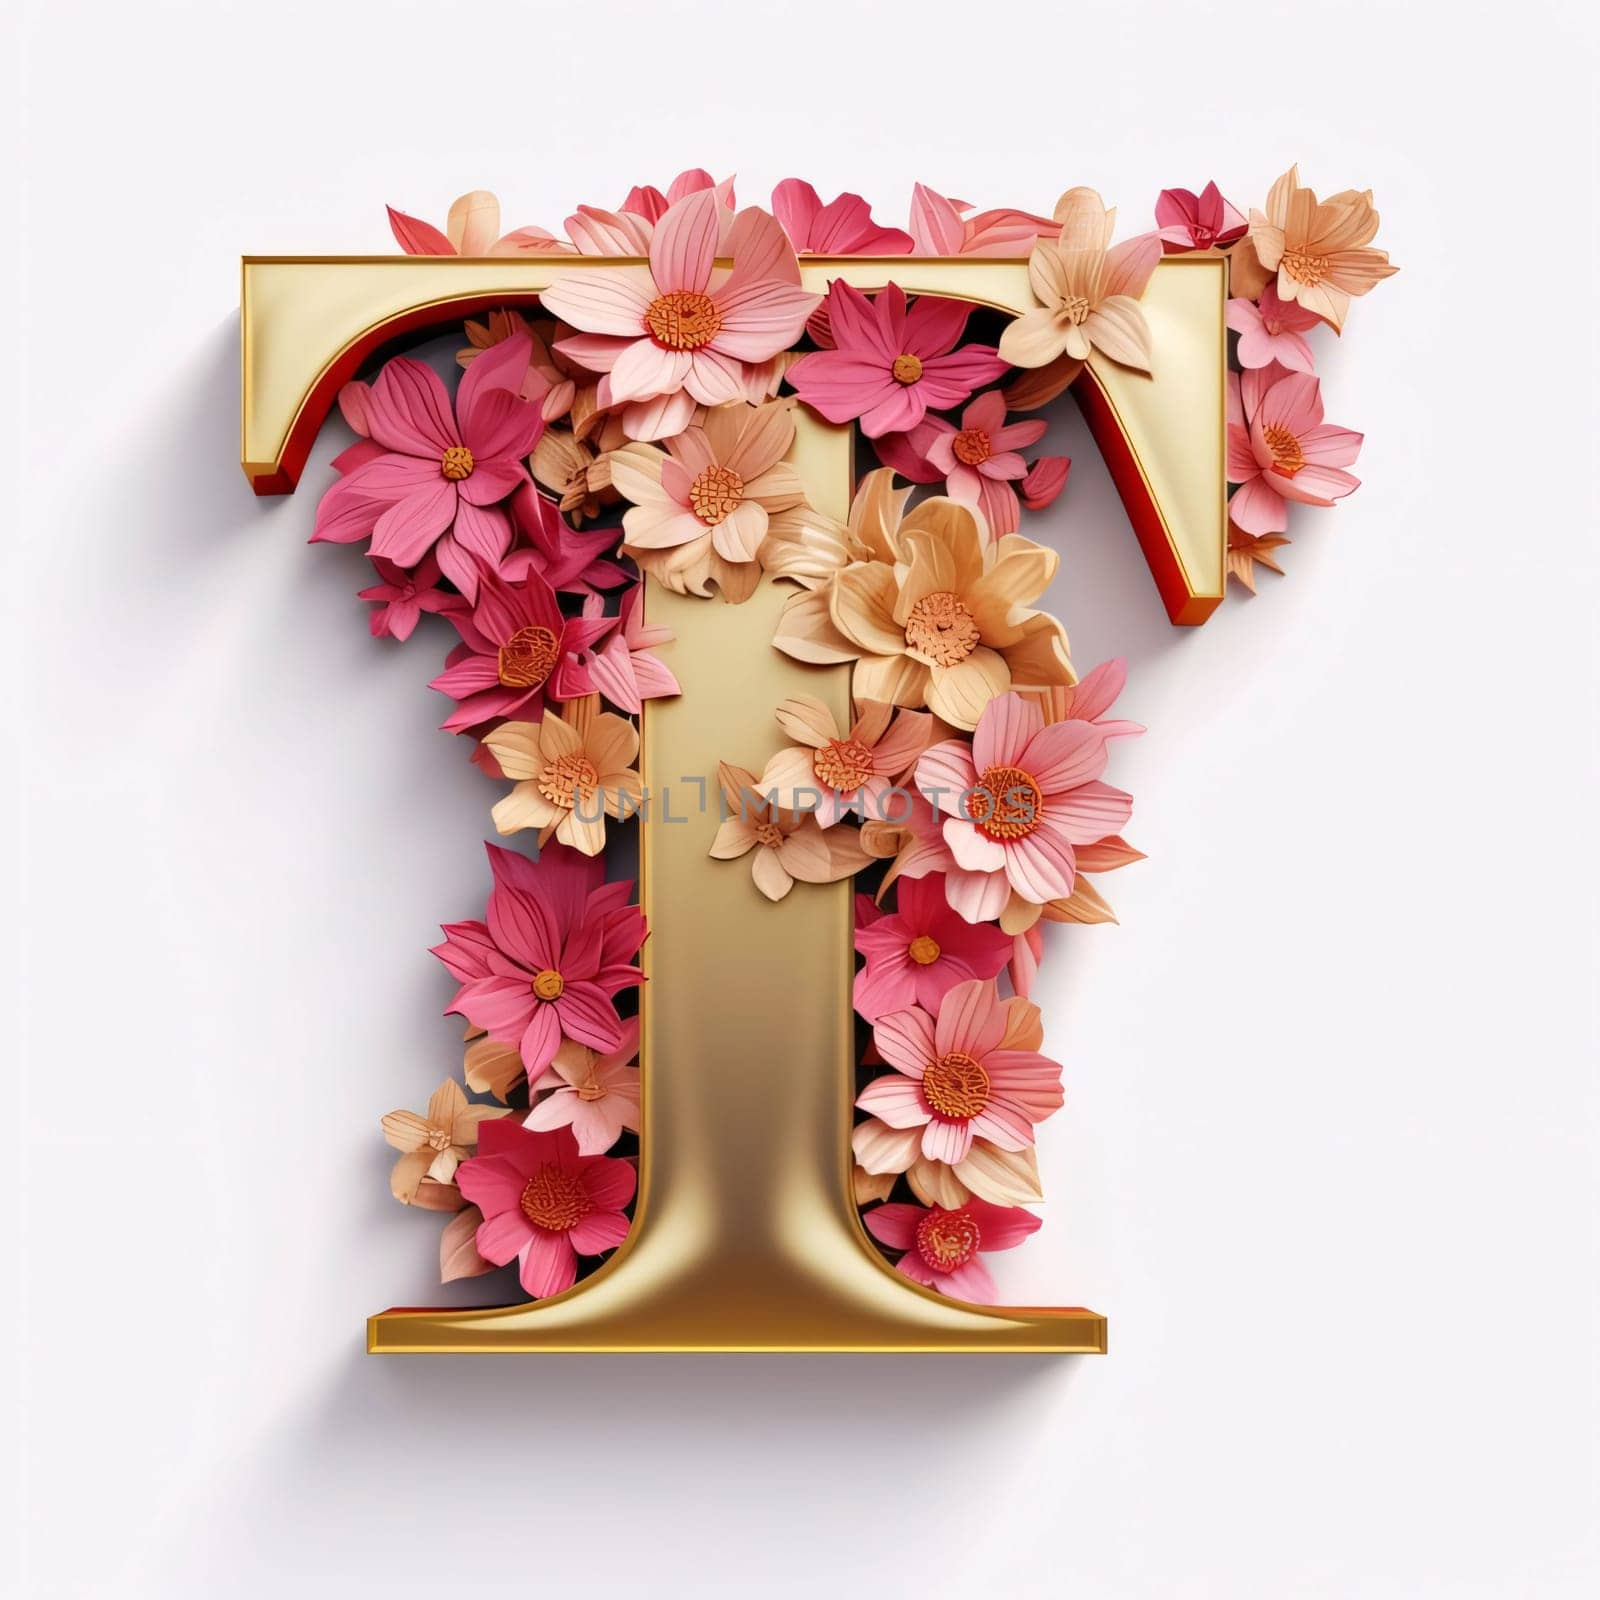 Graphic alphabet letters: Floral alphabet. Letter T made of flowers. 3d render